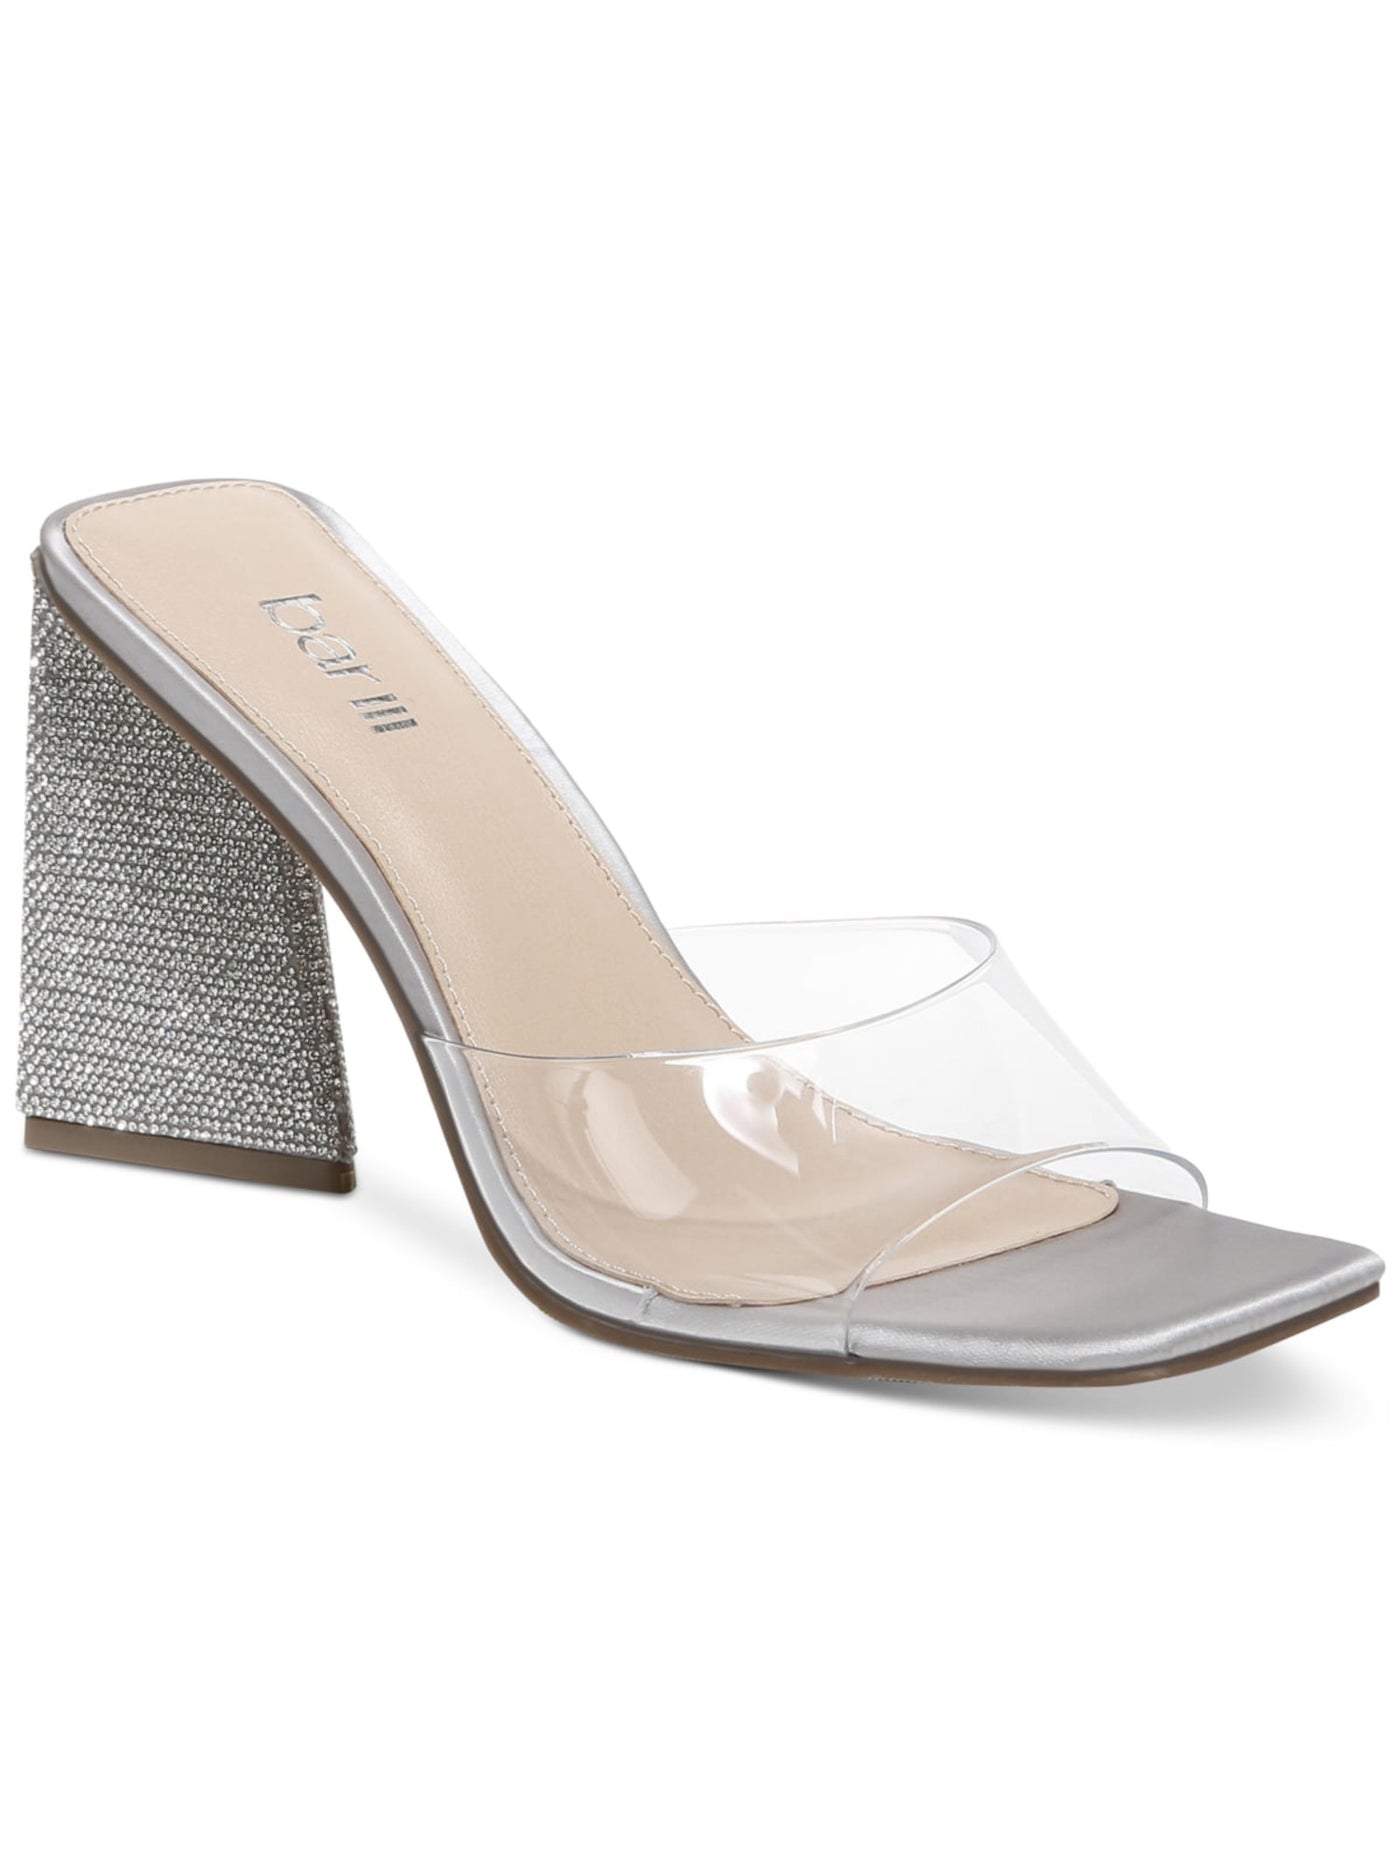 BAR III Womens Silver Embellished Padded Avva Square Toe Stacked Heel Slip On Dress Heeled Sandal 6.5 M